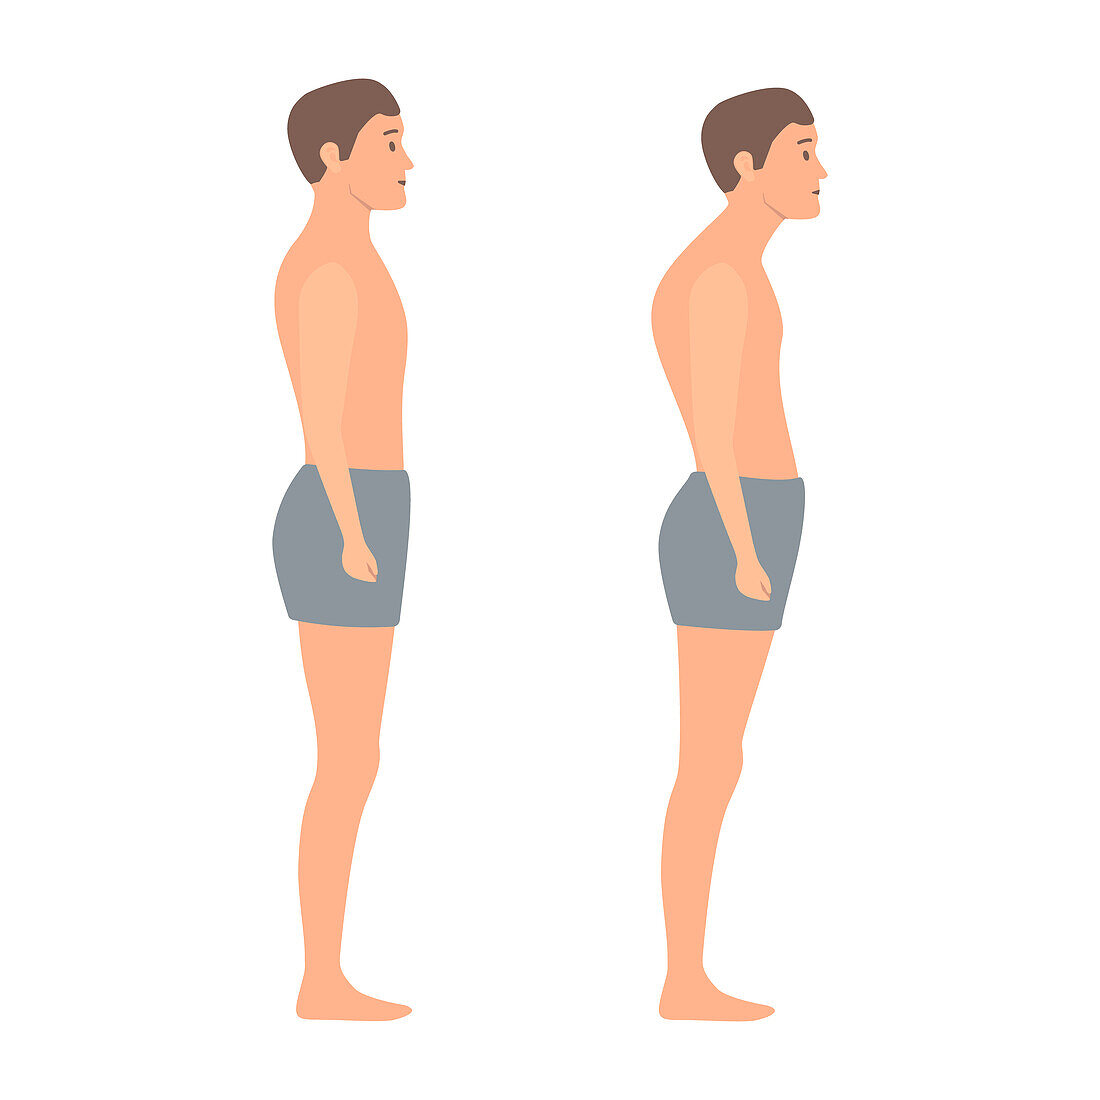 Good and bad posture, conceptual illustration